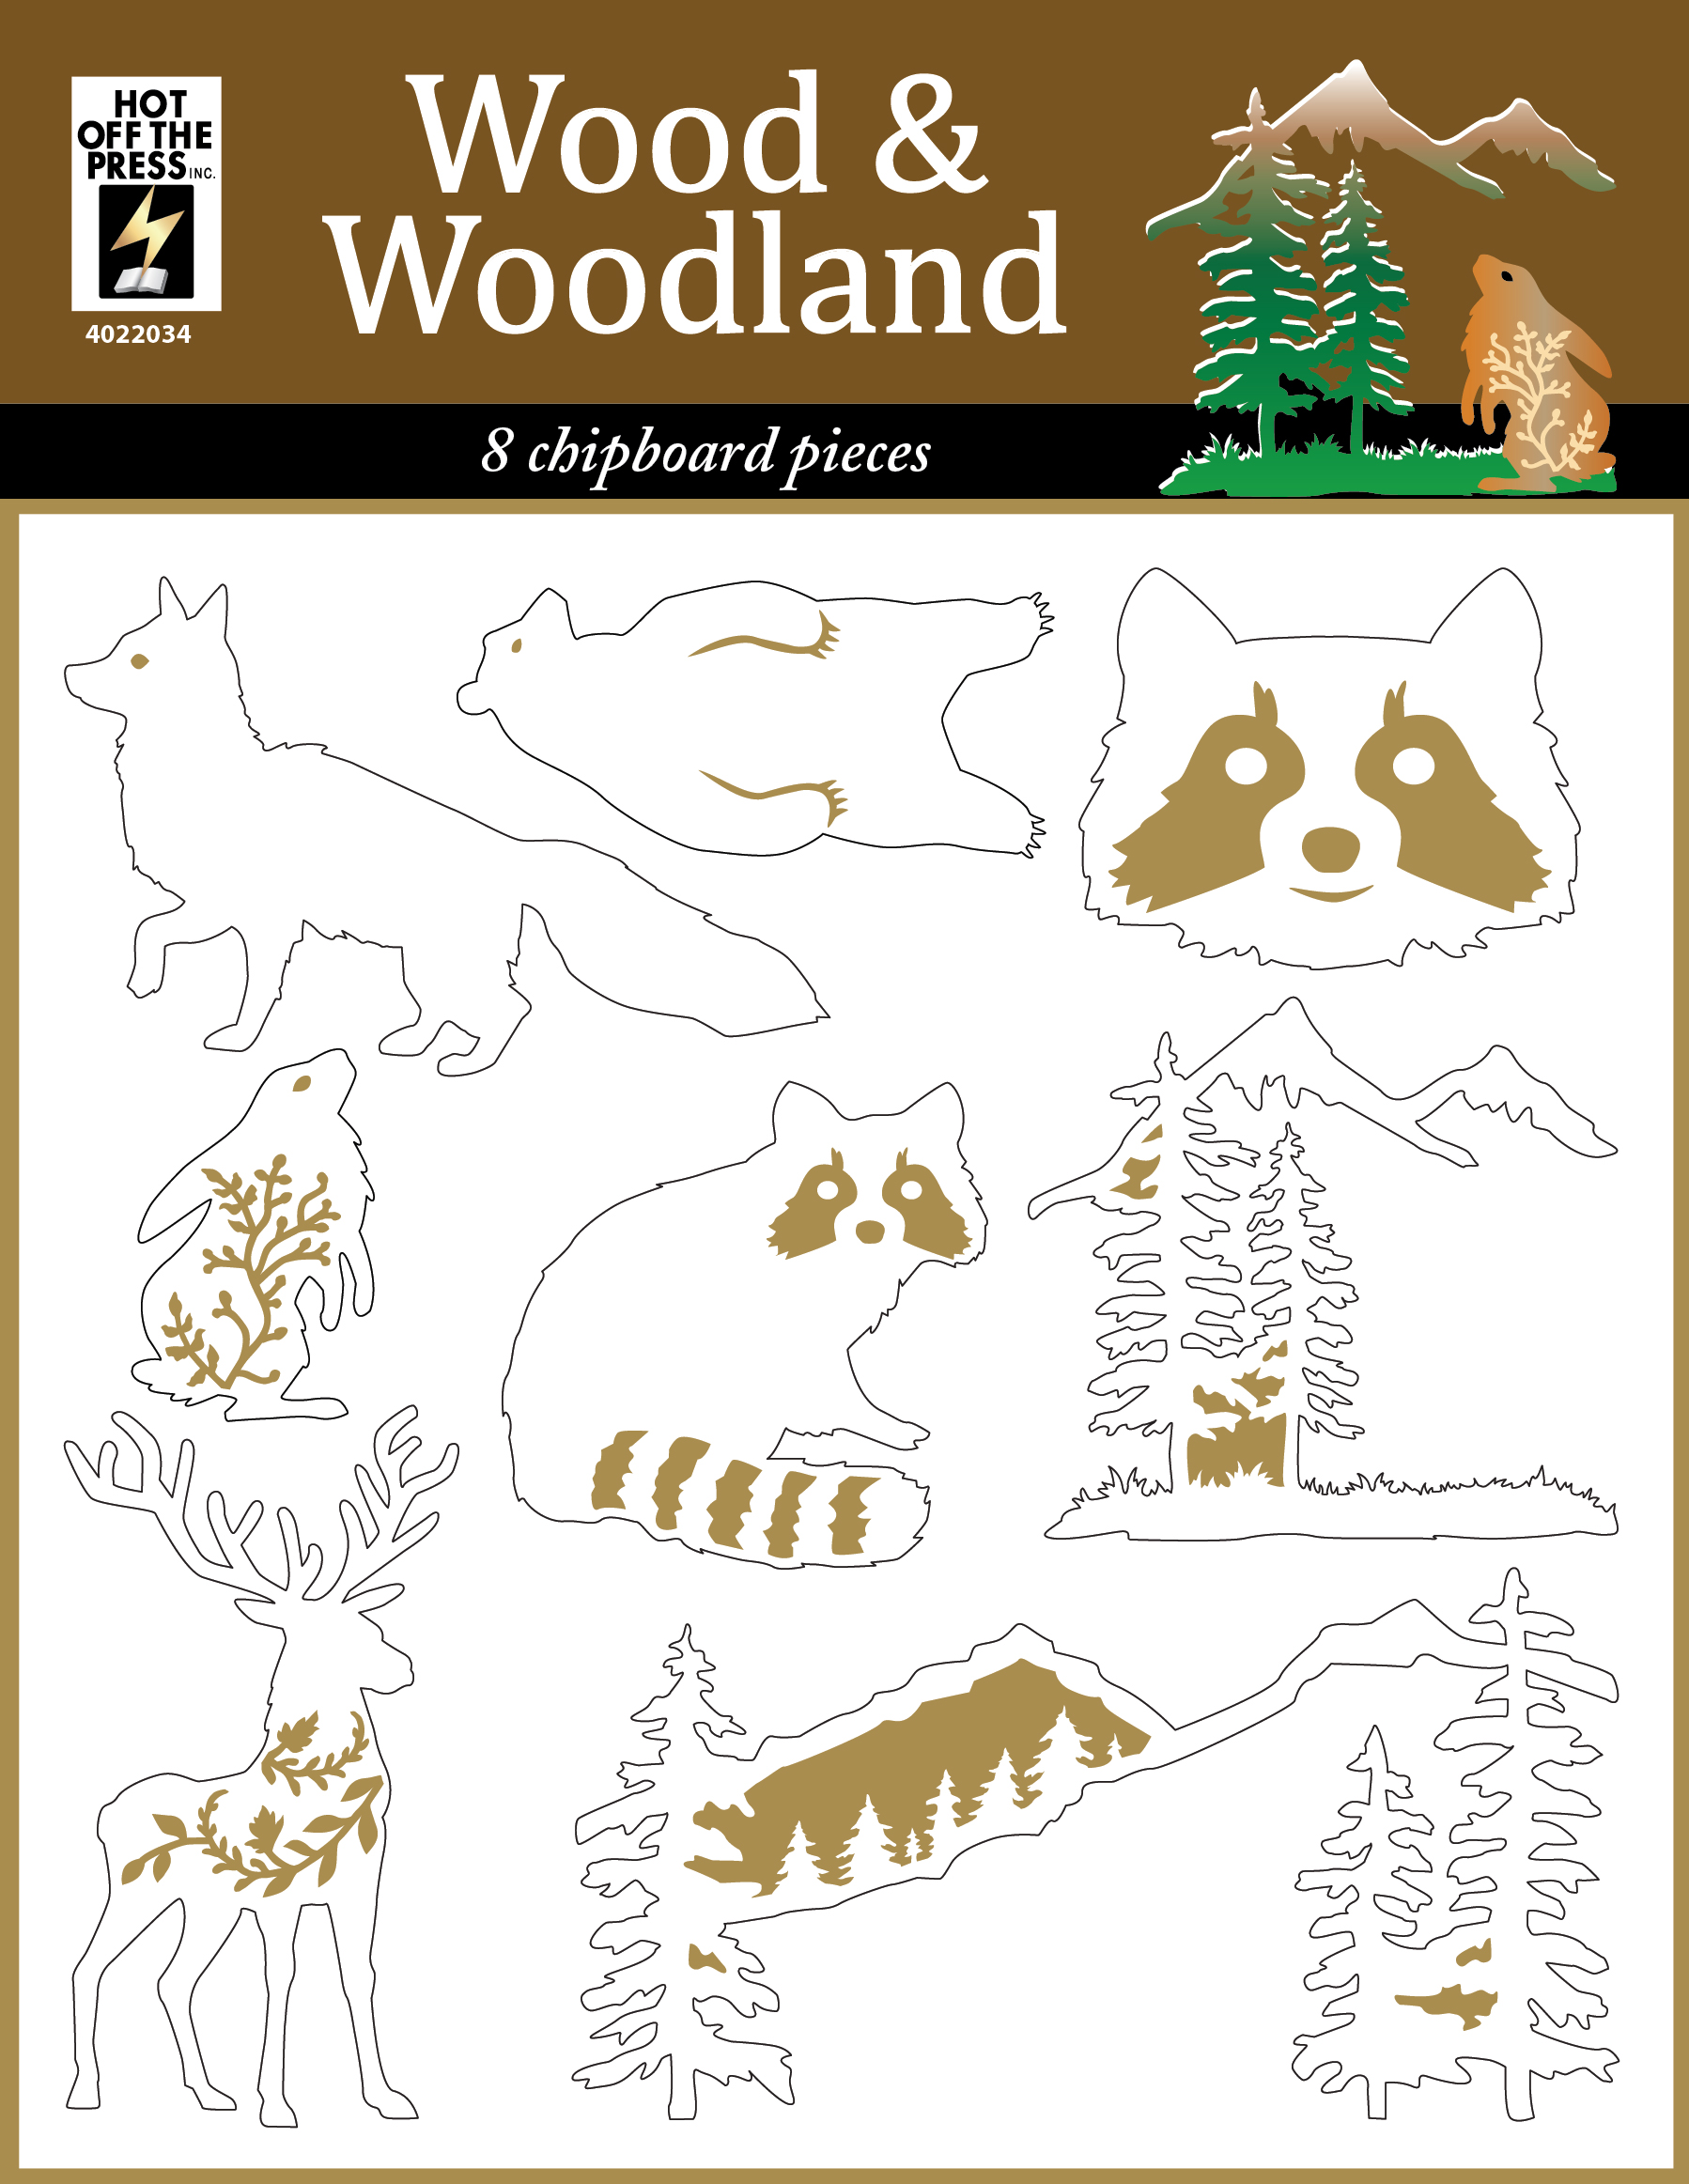 Wood & Woodland Chipboard